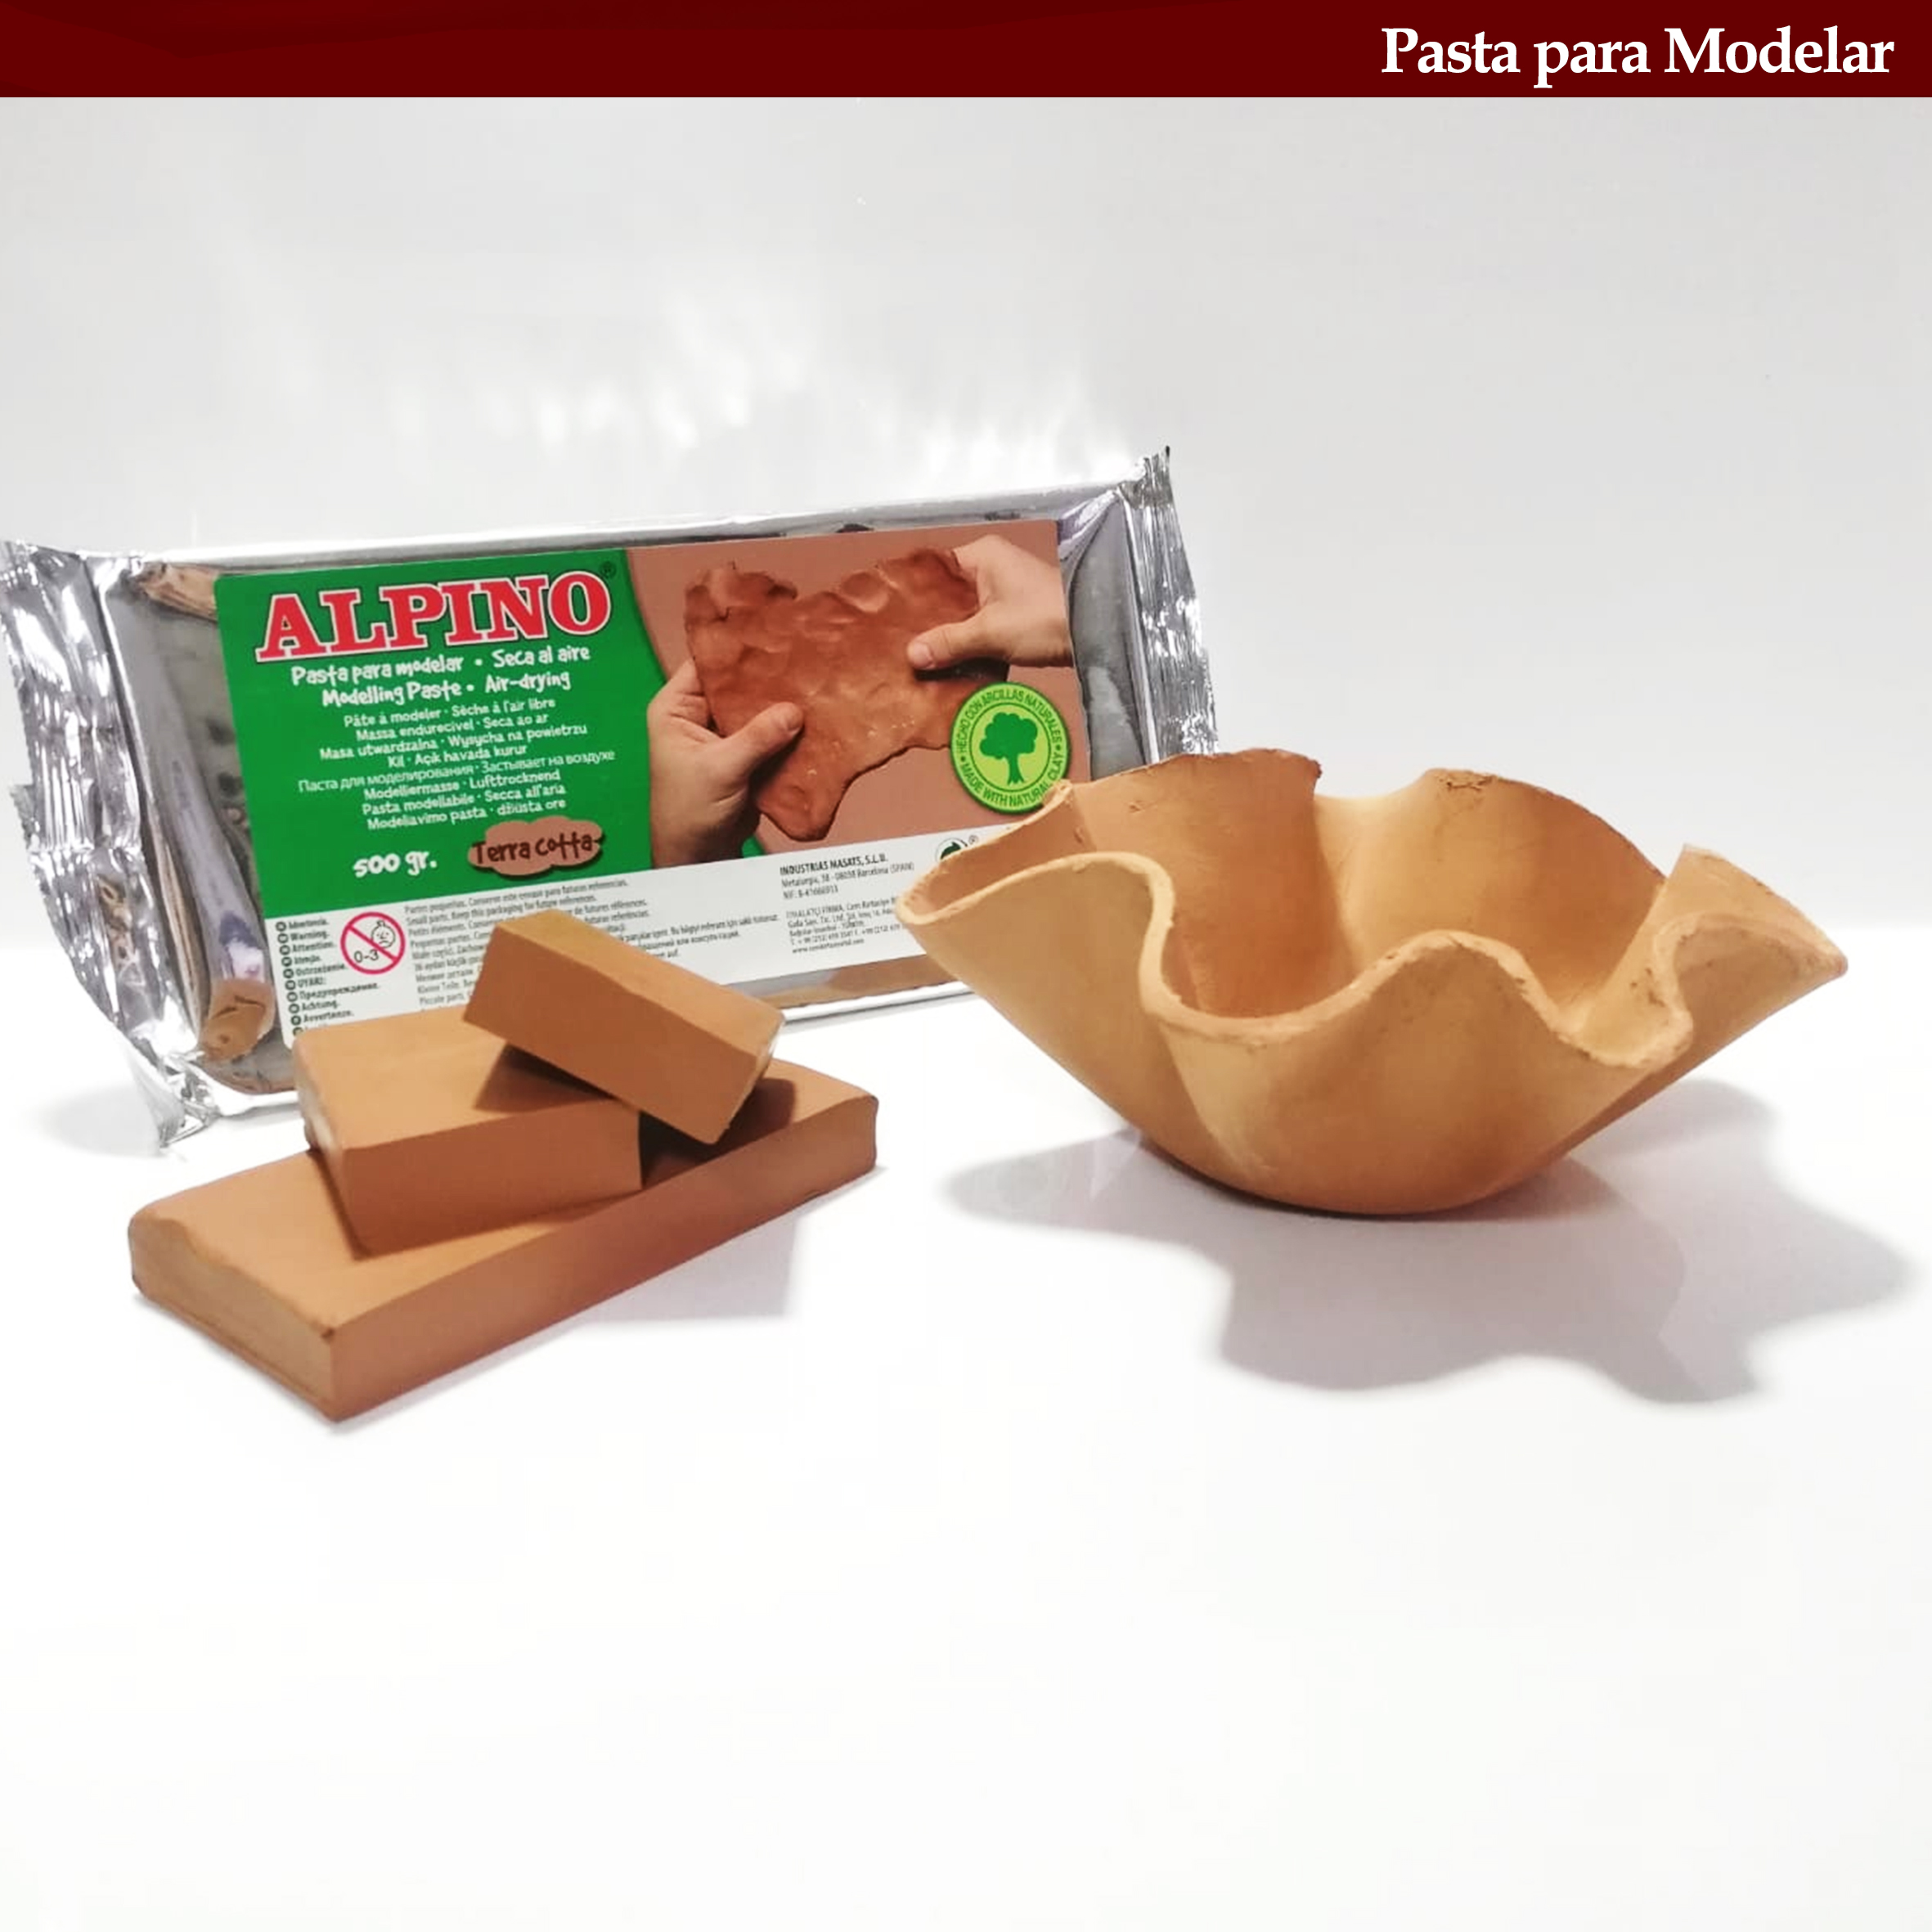 Pasta para modelar Alpino de 500 grs. terracota